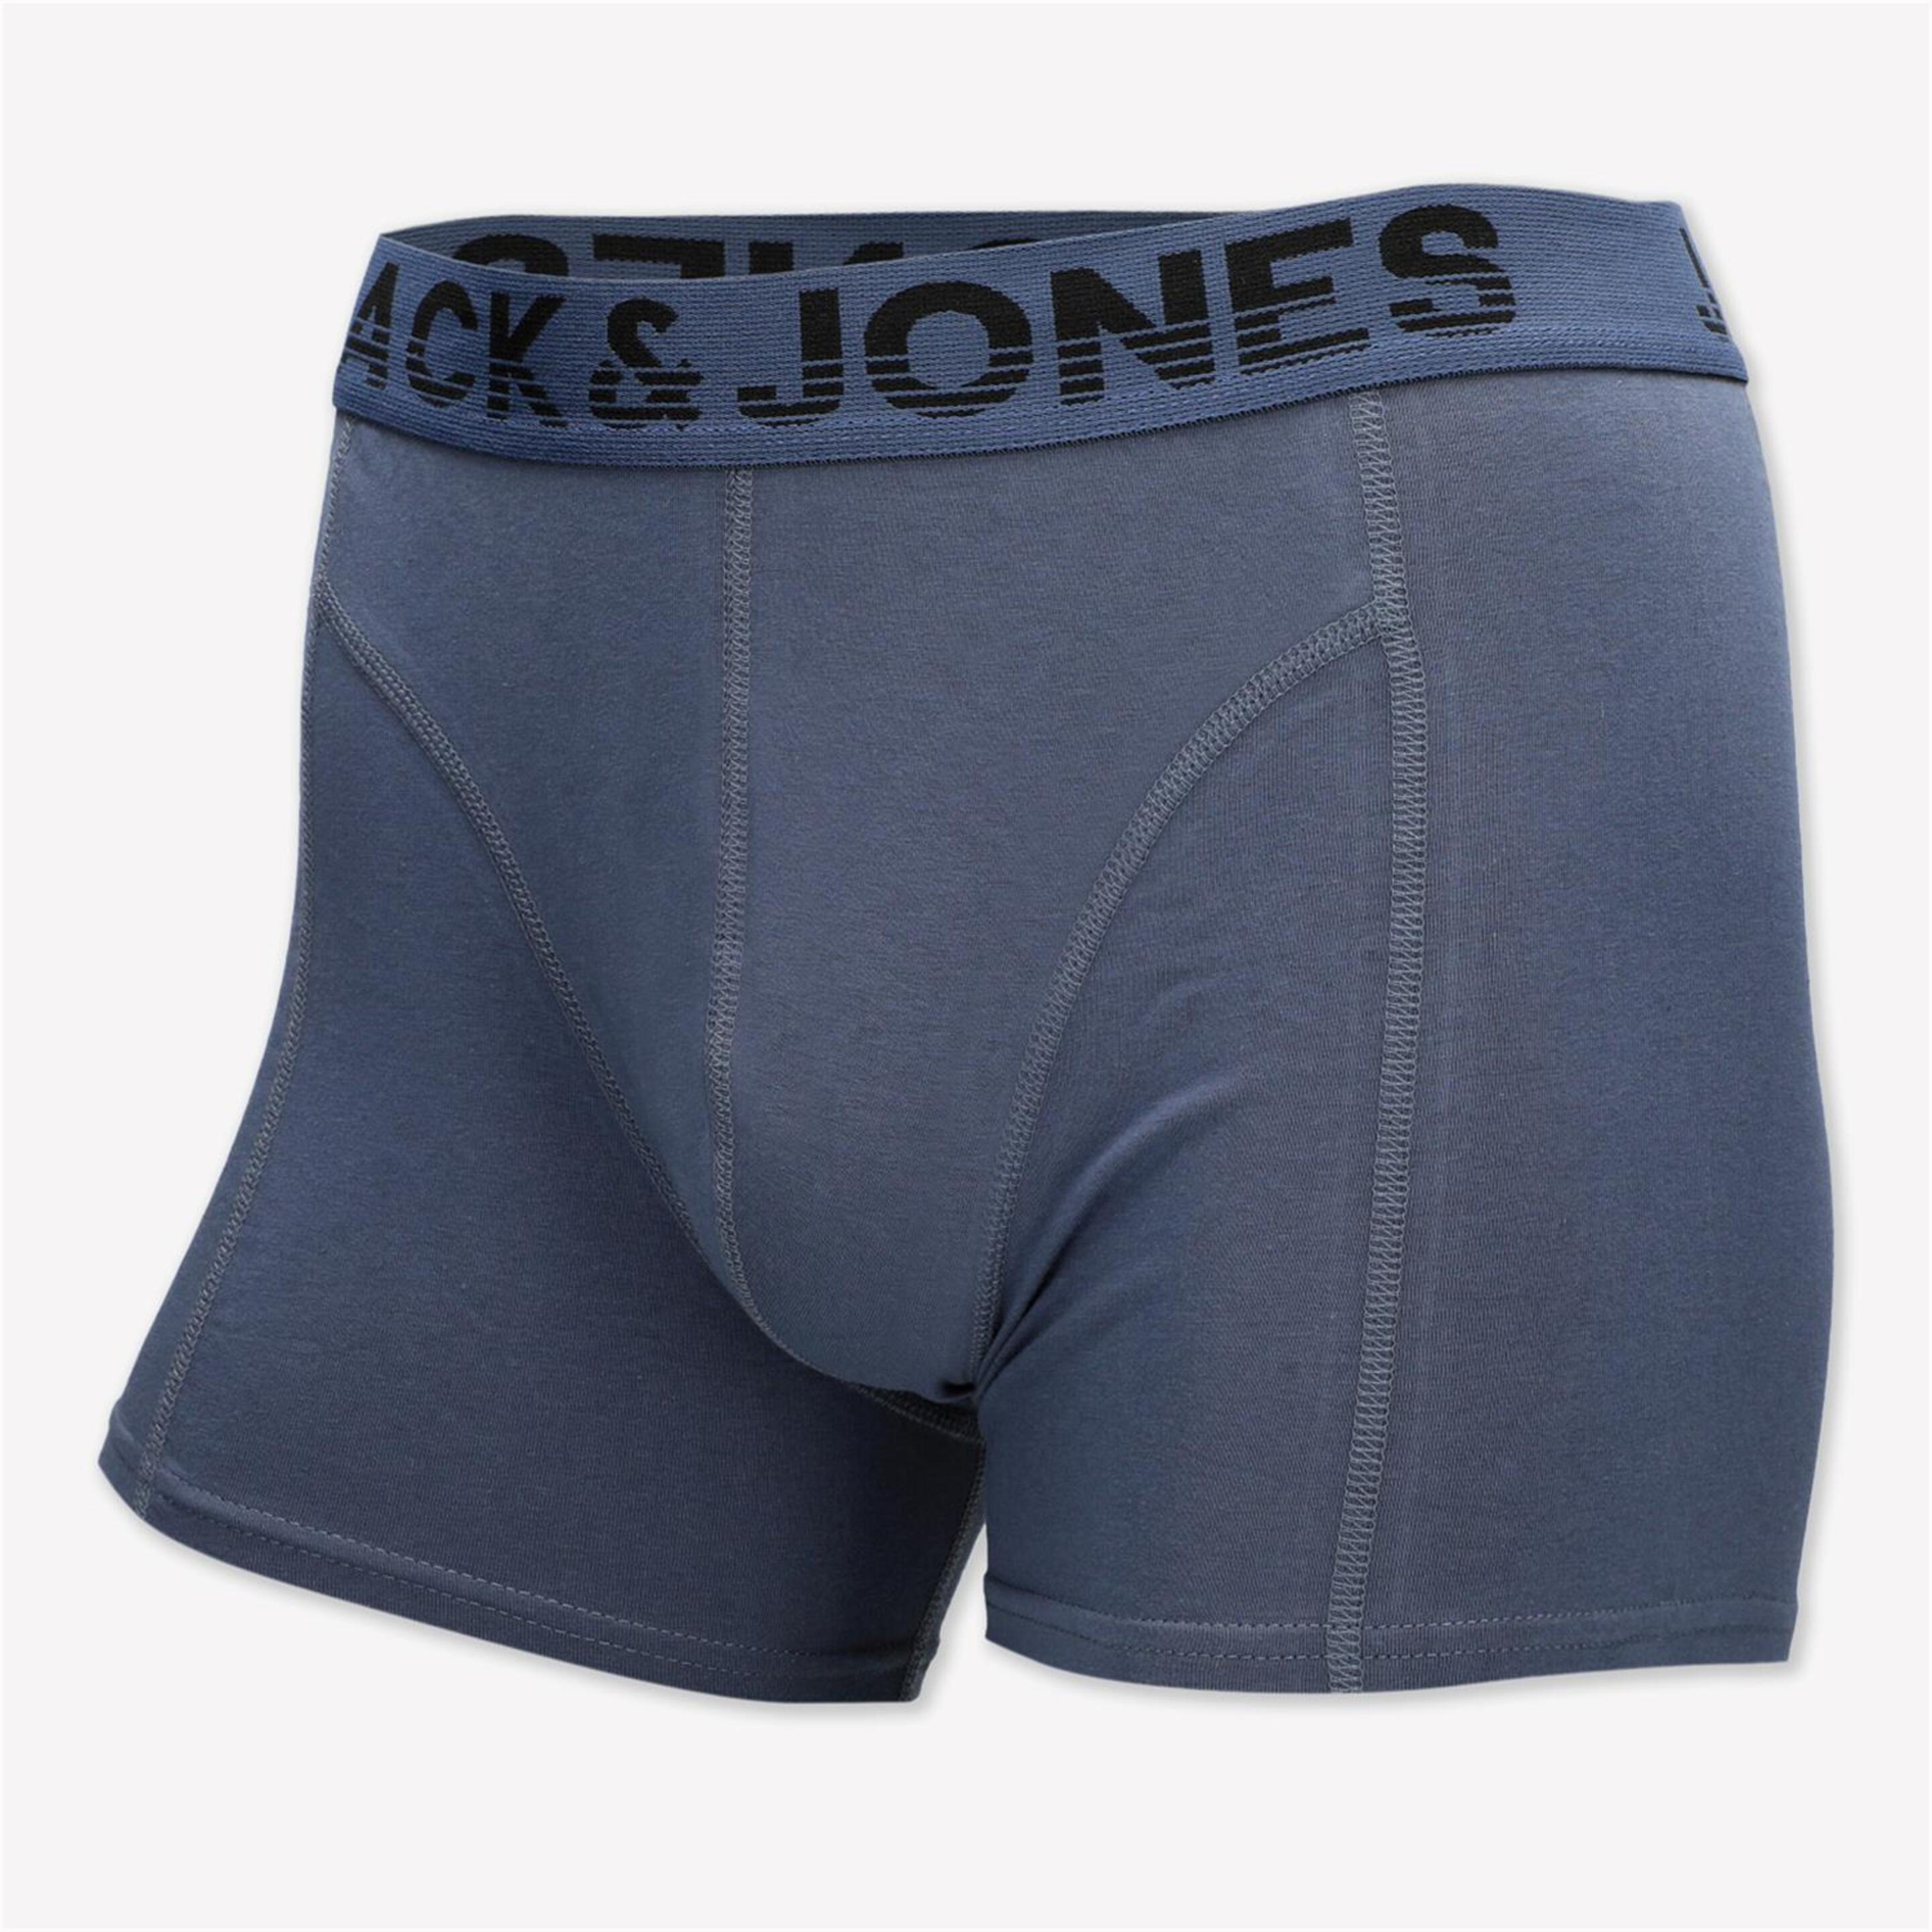 Jack & Jones Jacshade - Denim - Calzoncillos Bóxer Hombre